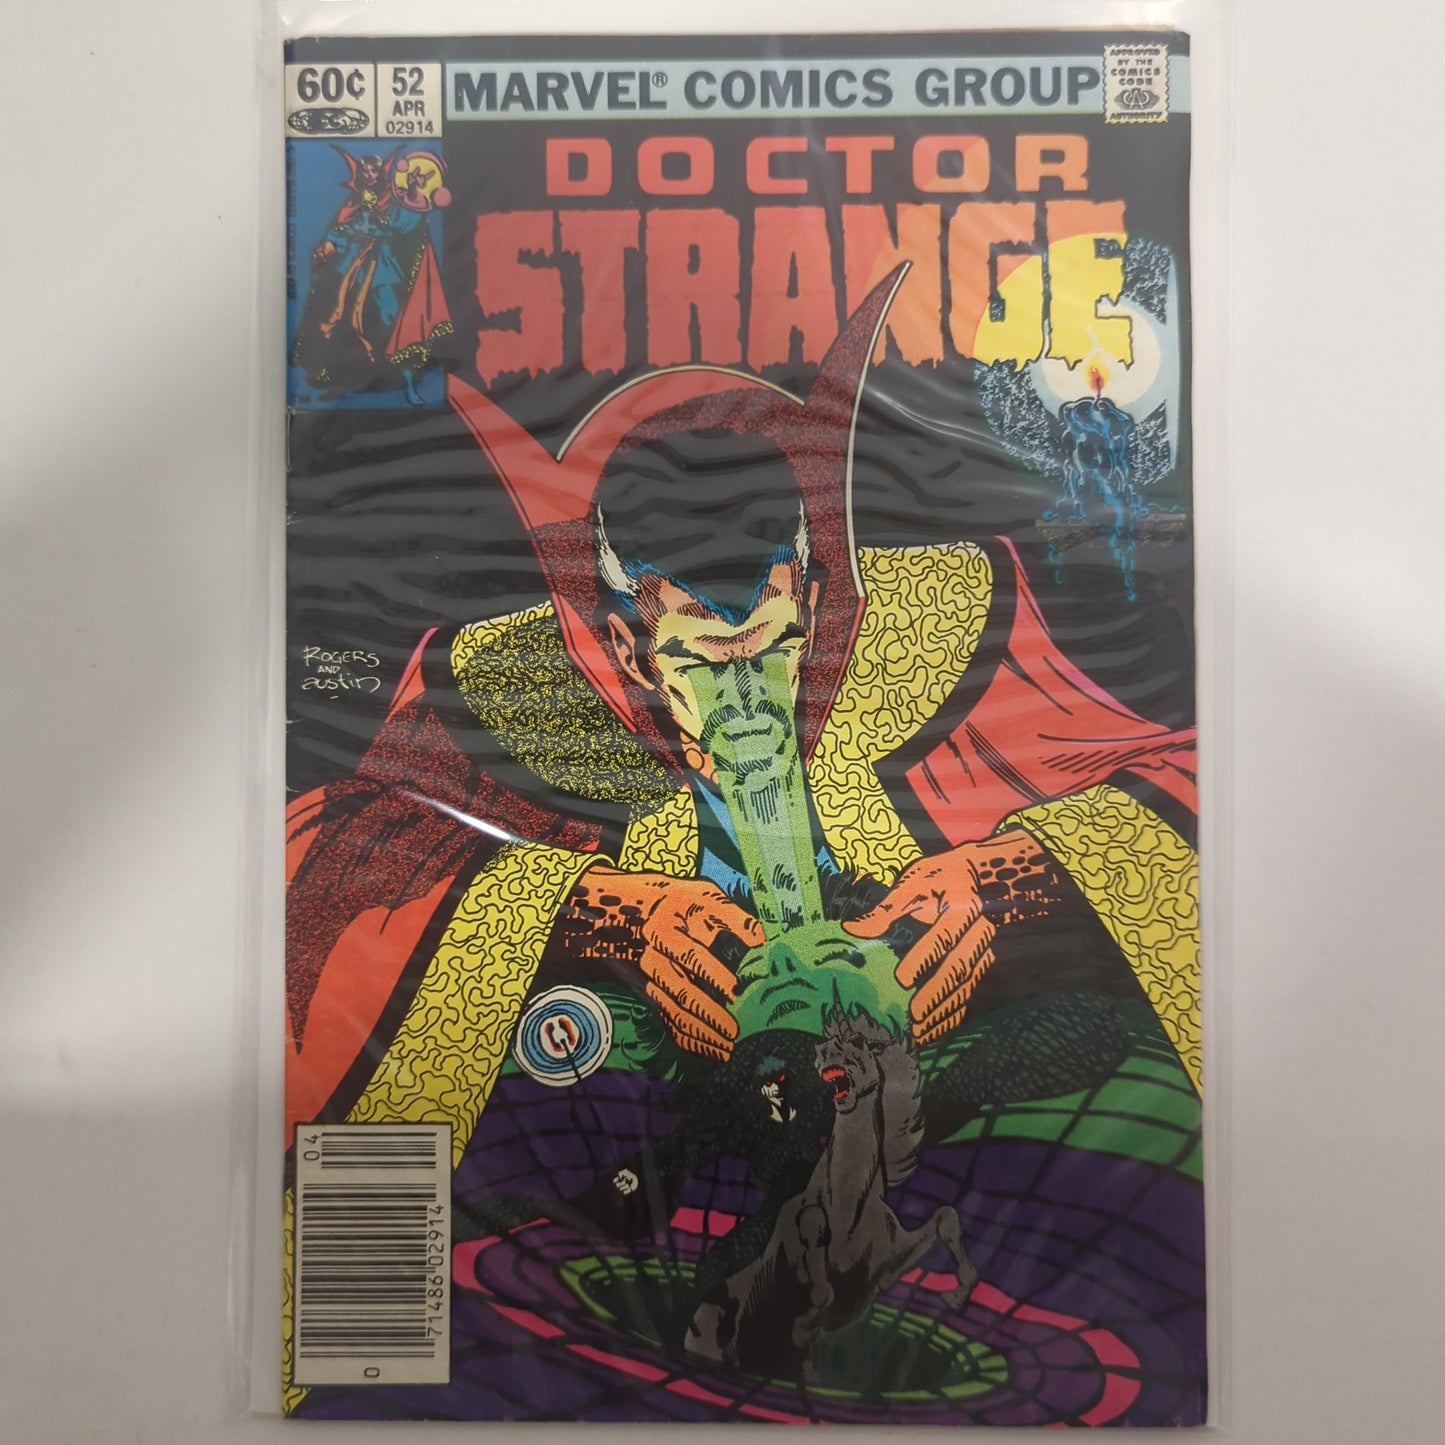 Doctor Strange #52 Newsstand